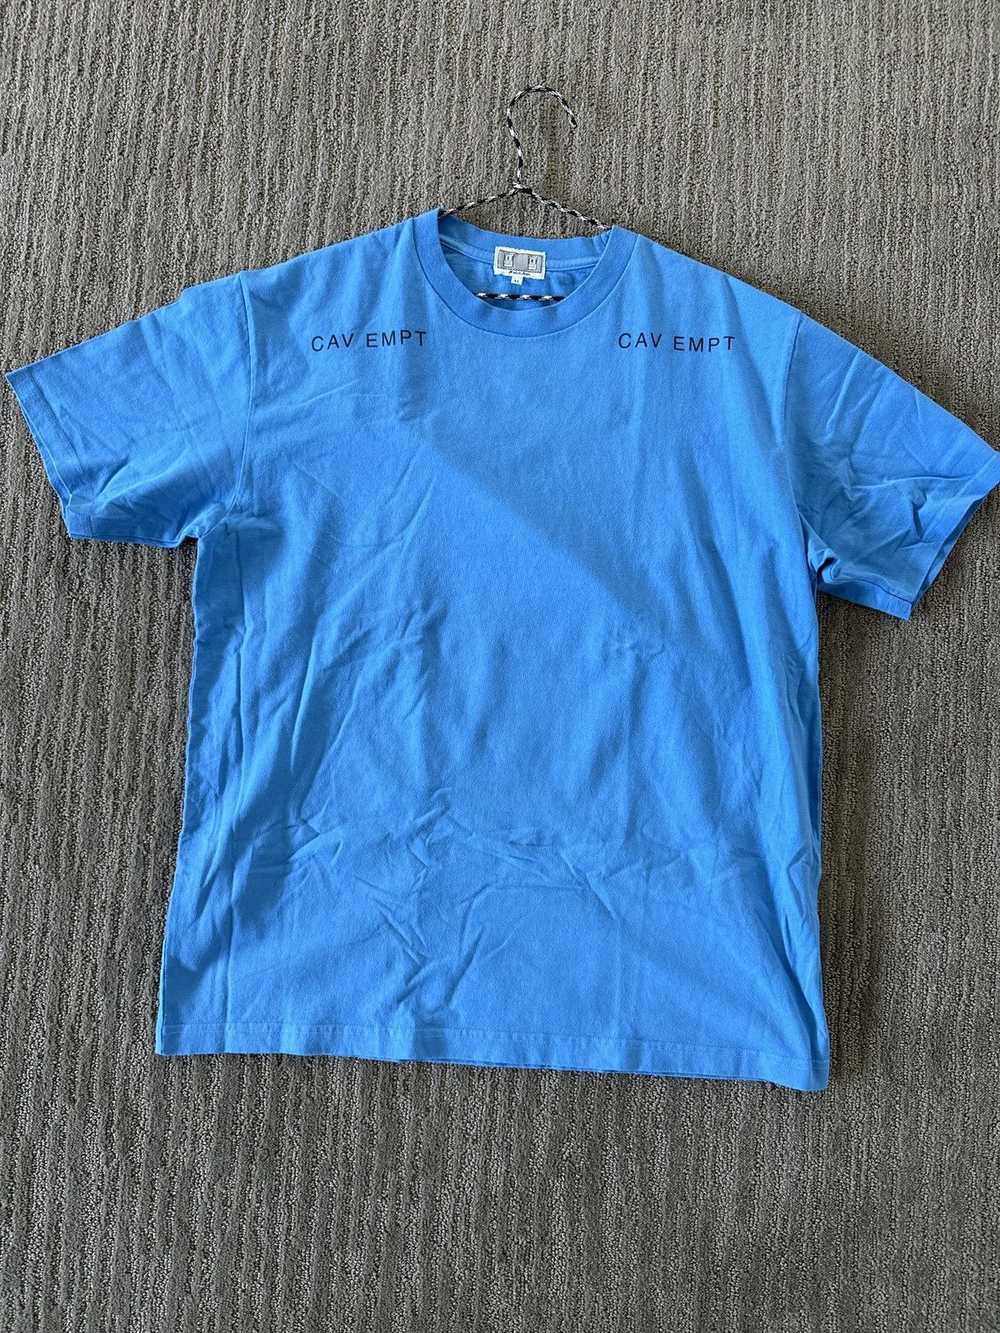 Cav Empt Blue C:/// T-Shirt - image 1